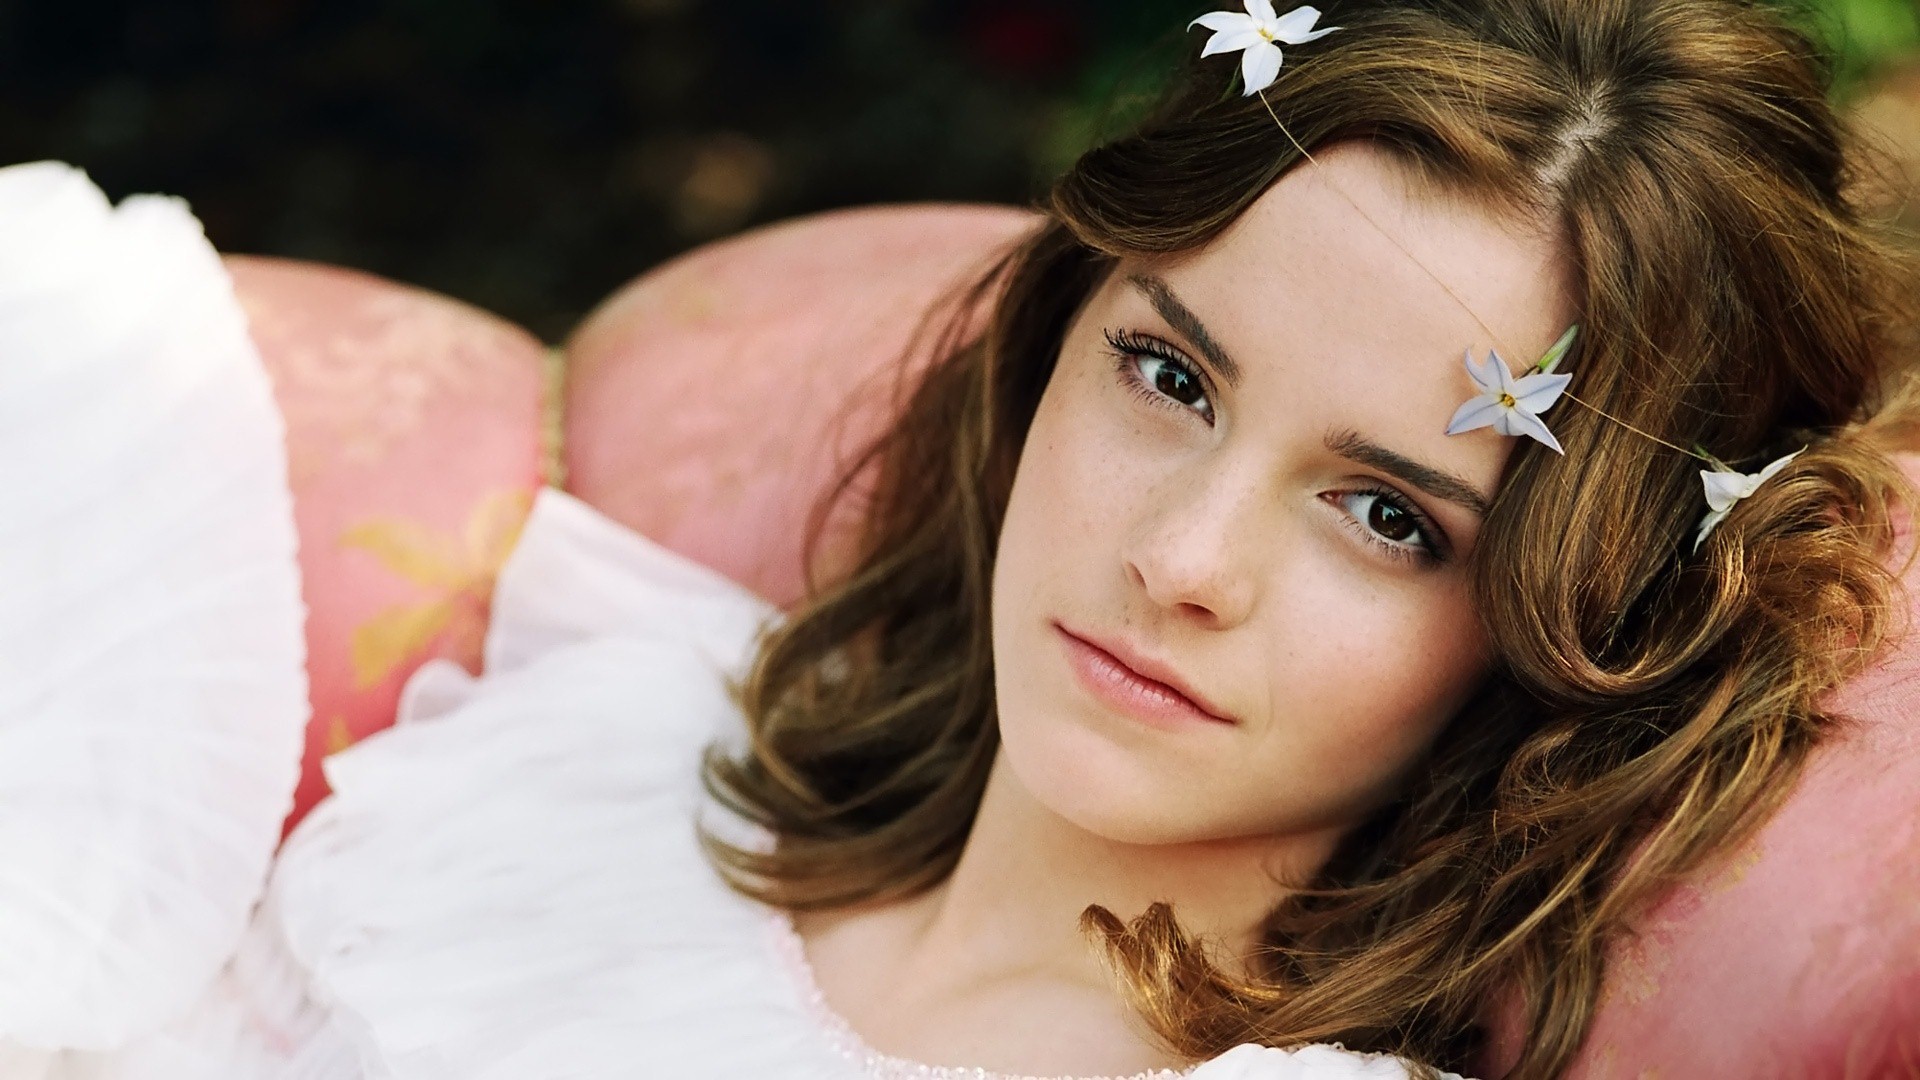 Emma Watson Wallpapers | Free Download HD Hot Beautiful Actress Images